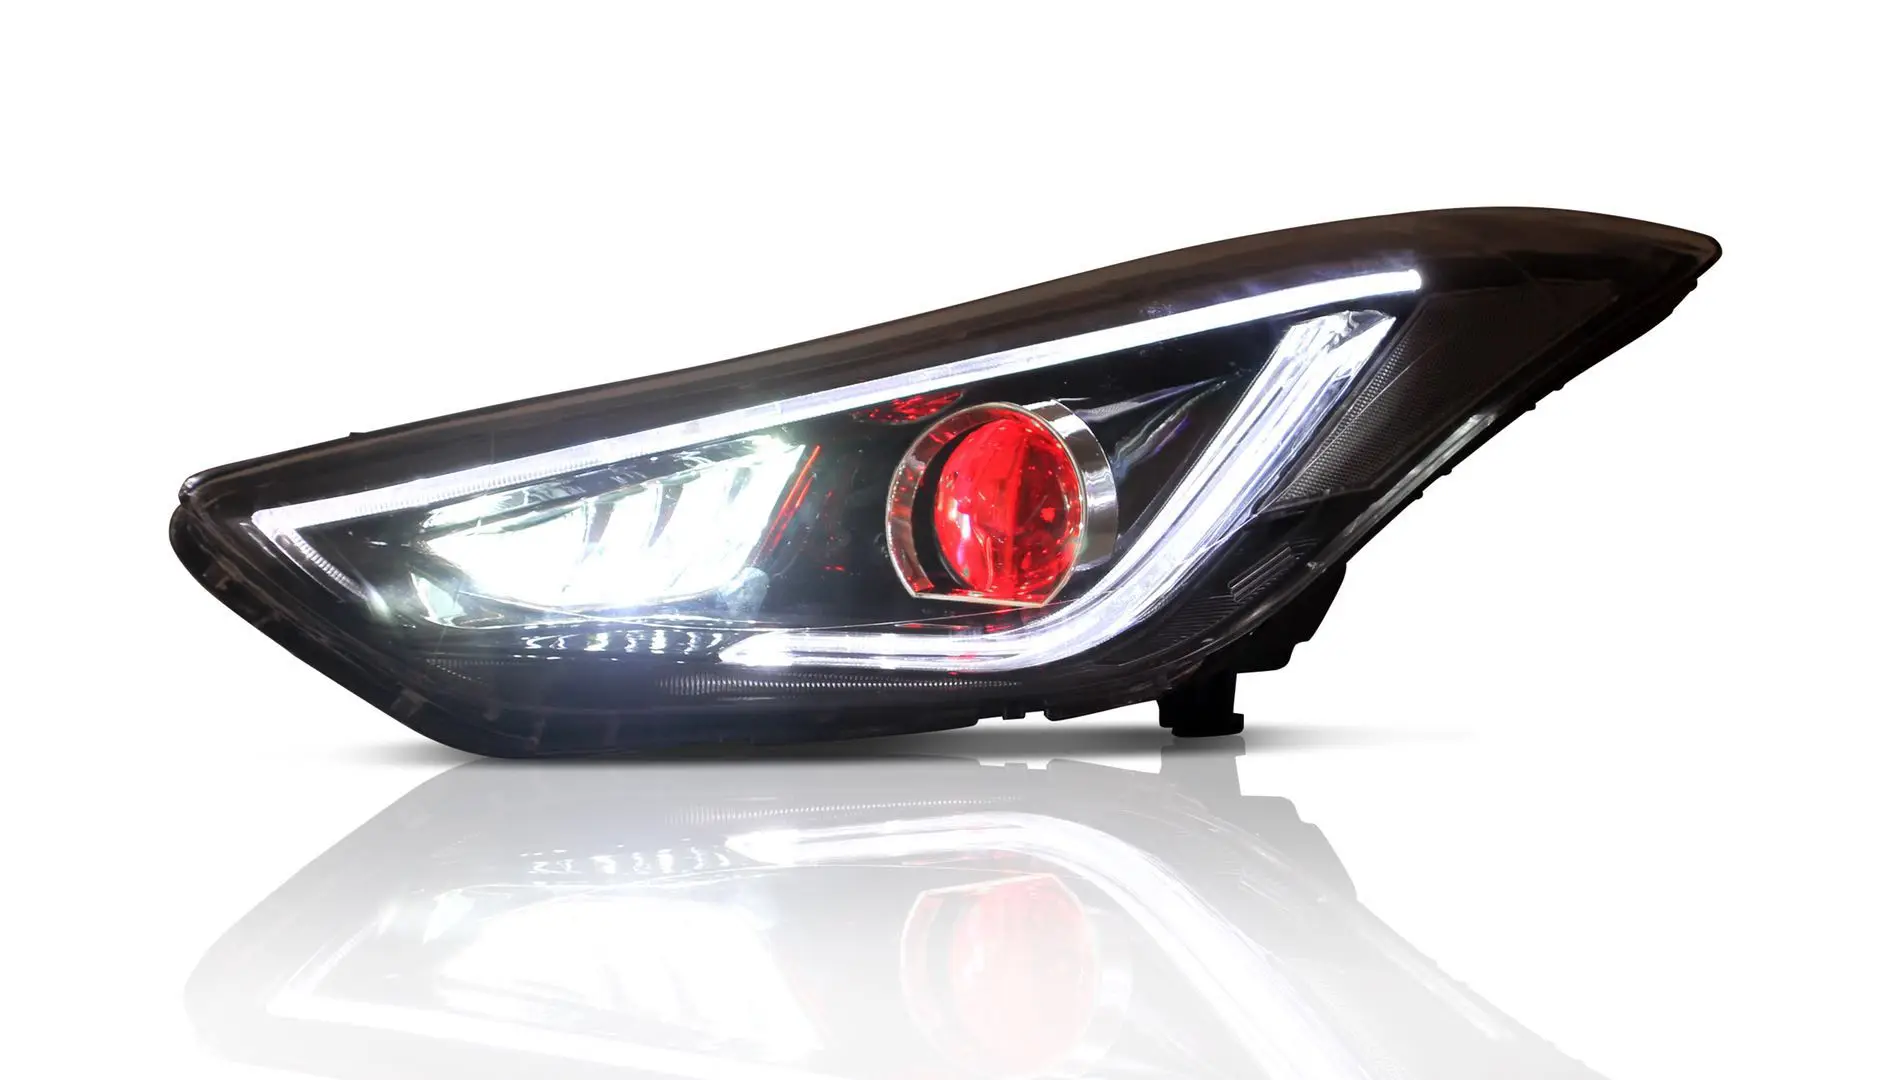 VLAND manufacturer for car headlight for Elantra head lamp 2011 2012 2013 2014 2015 Elantra LED head light with Demon eyes